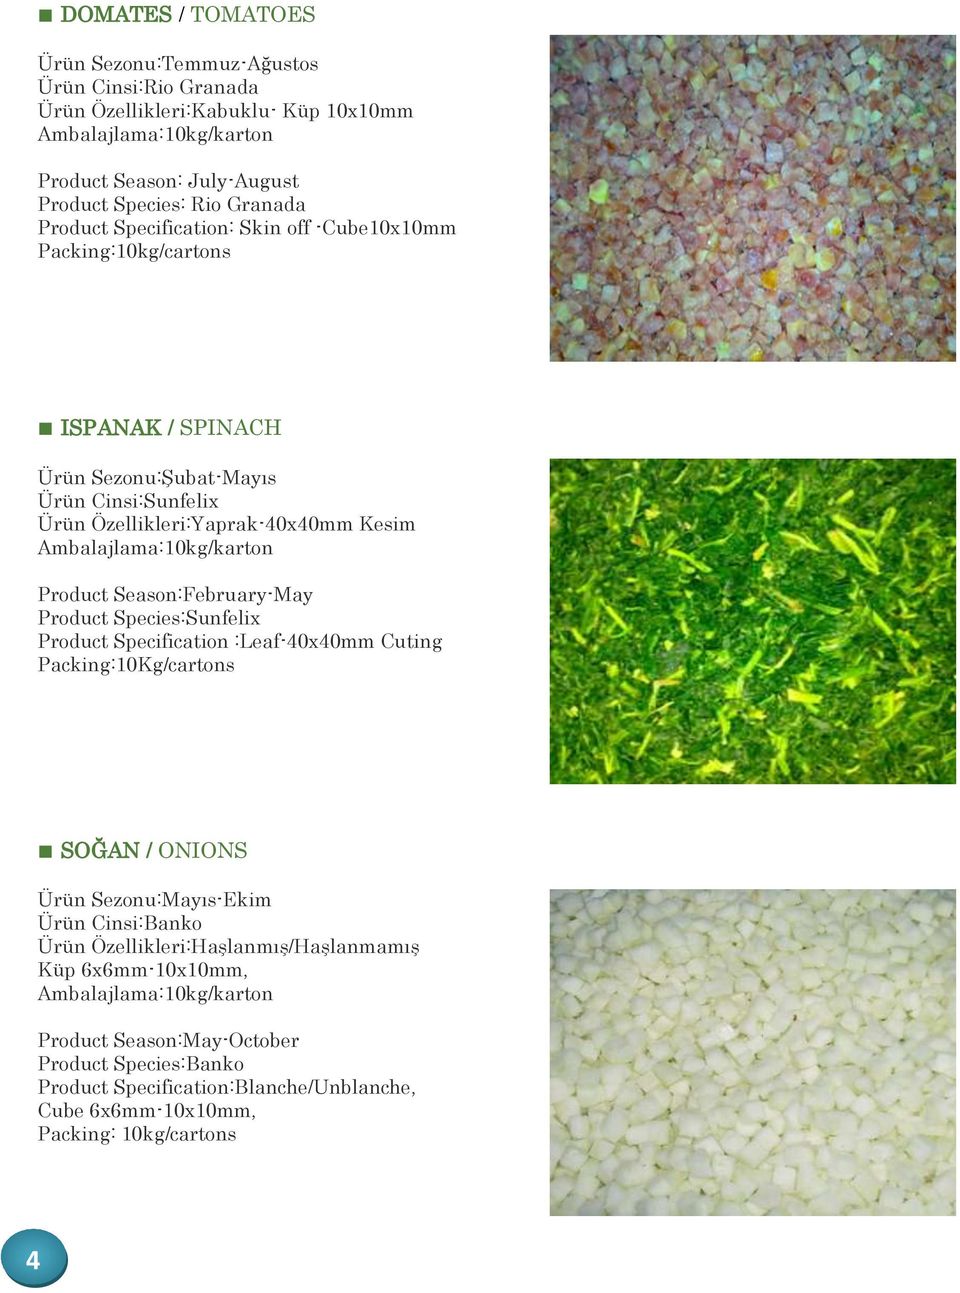 Kesim Product Season:February-May Product Species:Sunfelix Product Specification :Leaf-40x40mm Cuting Packing:10Kg/cartons SOĞAN / ONIONS Ürün